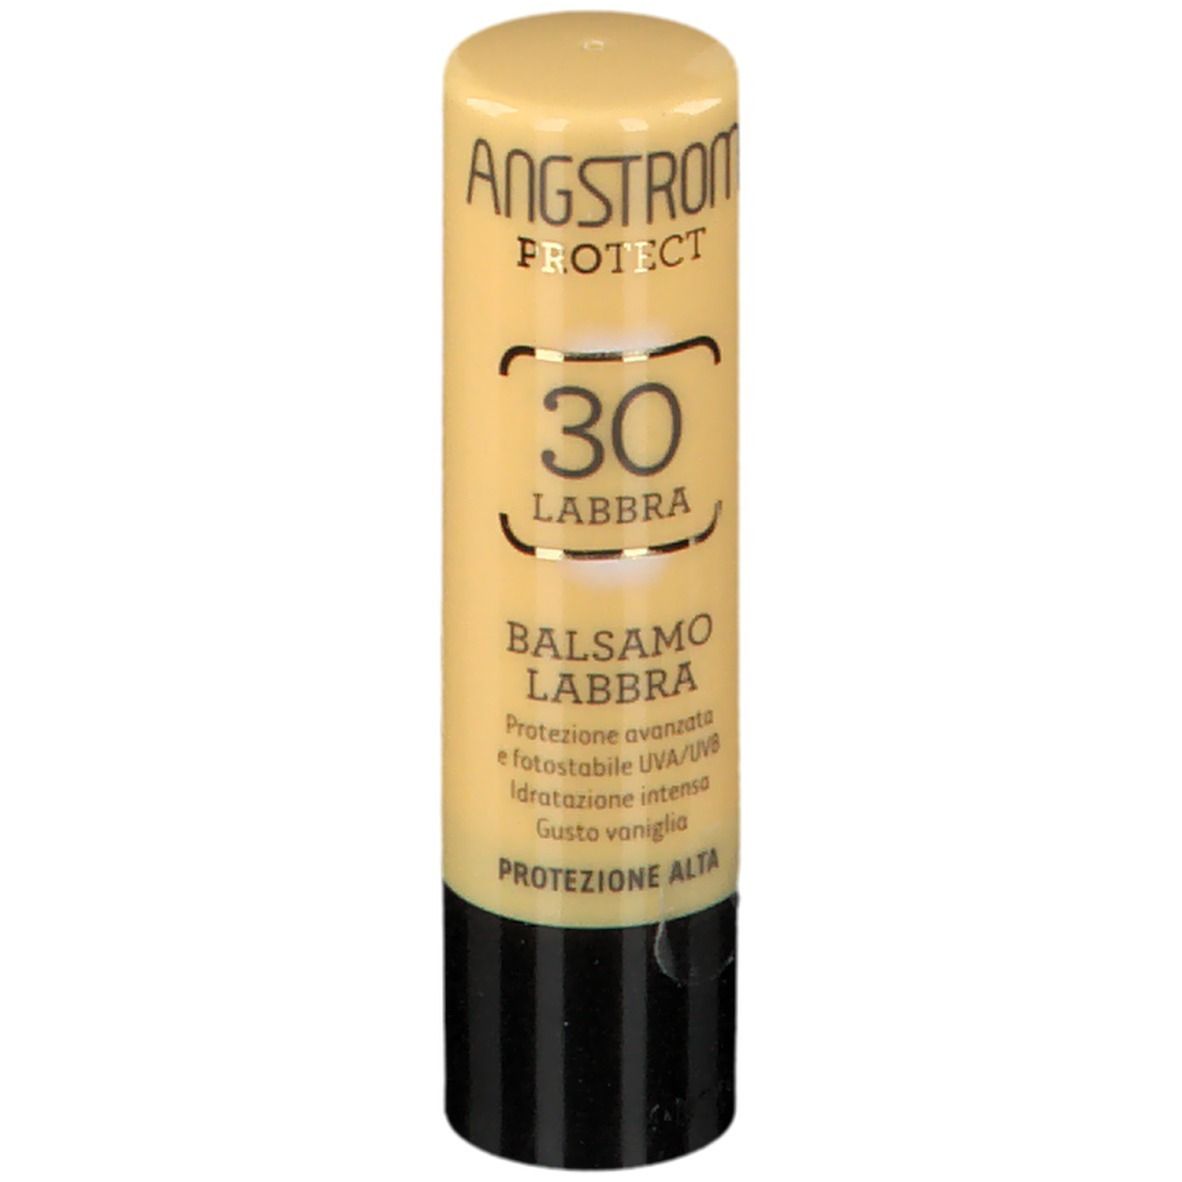 Angstrom Protect Balsamo Labbra Protettivo SPF 30